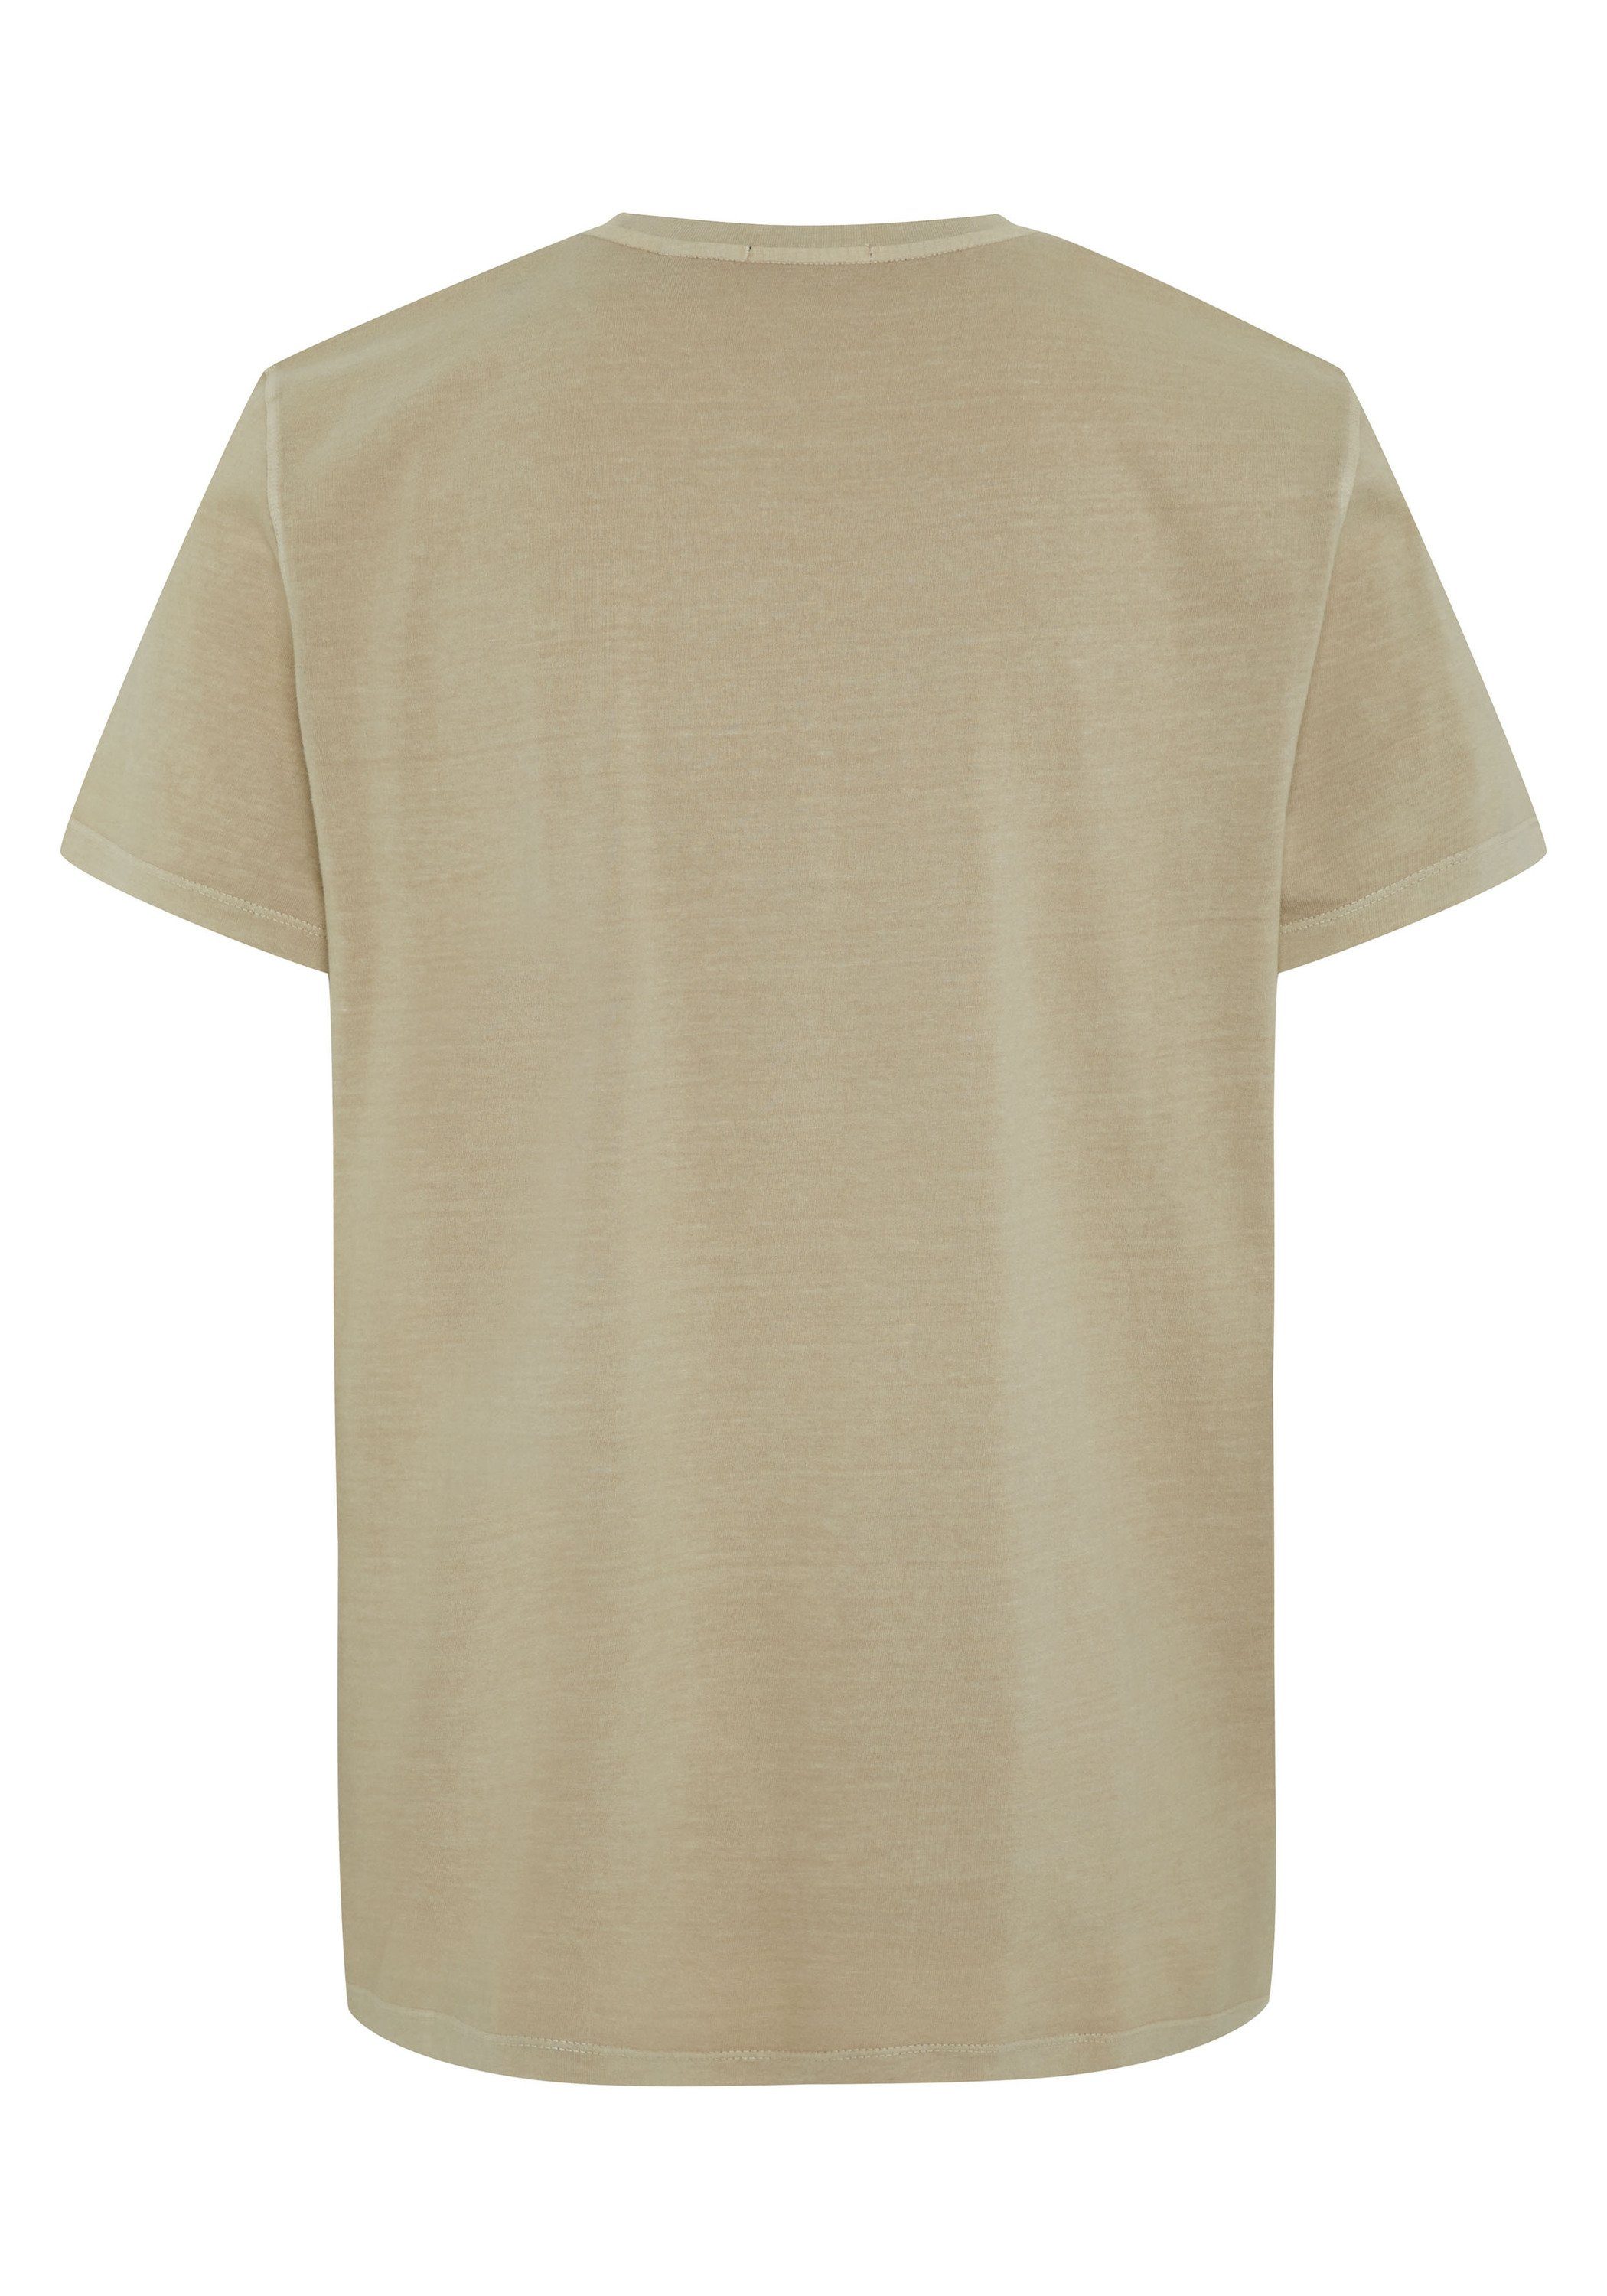 Tan mit Chiemsee 1 Frontprint Print-Shirt PlusMinus 15-1306 T-Shirt Oxford